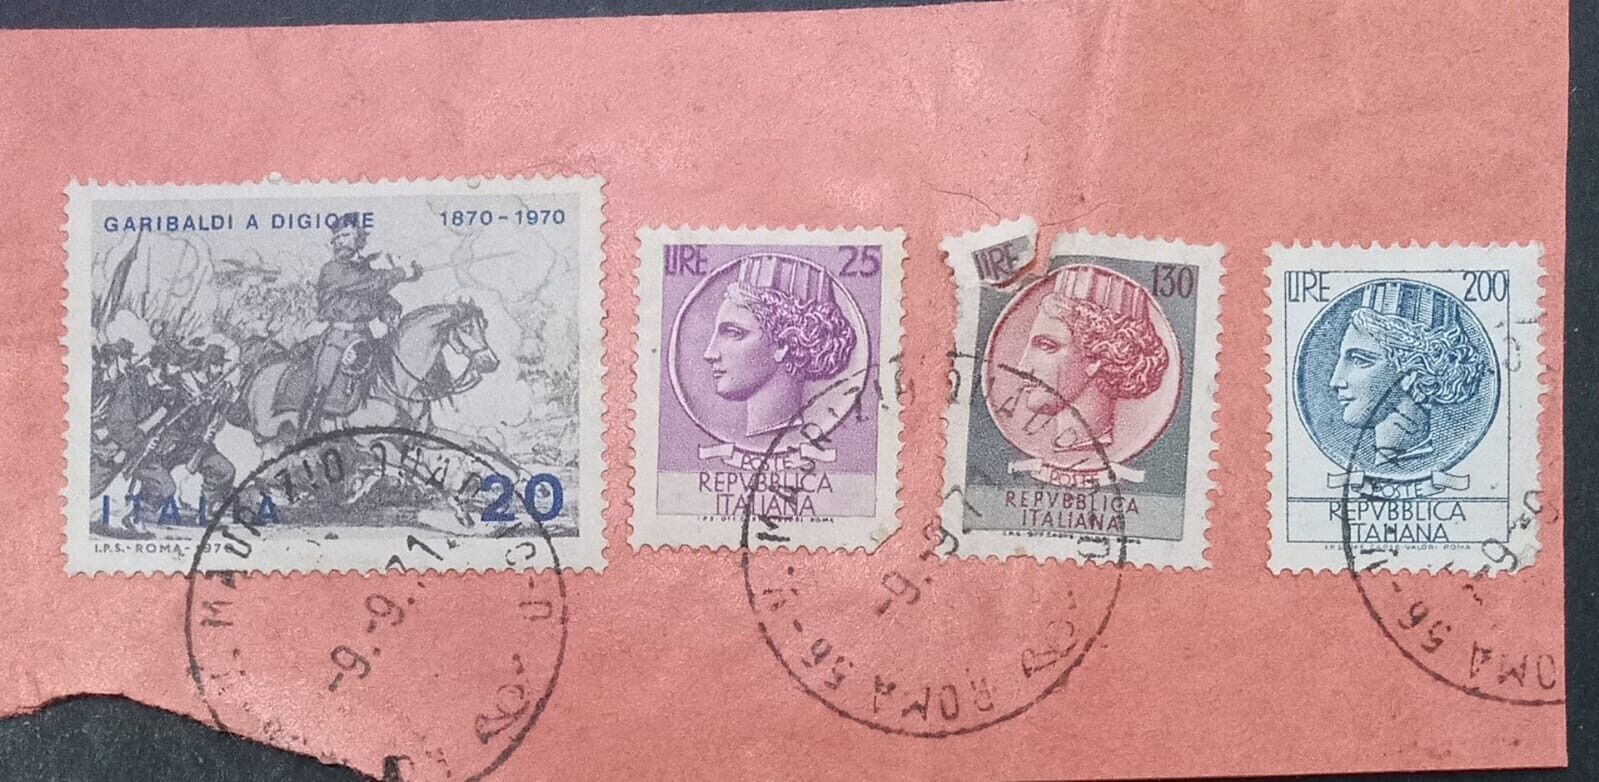 Italian Poste. Republica Italiana used stamps 1971 with one Garibaldi stamp